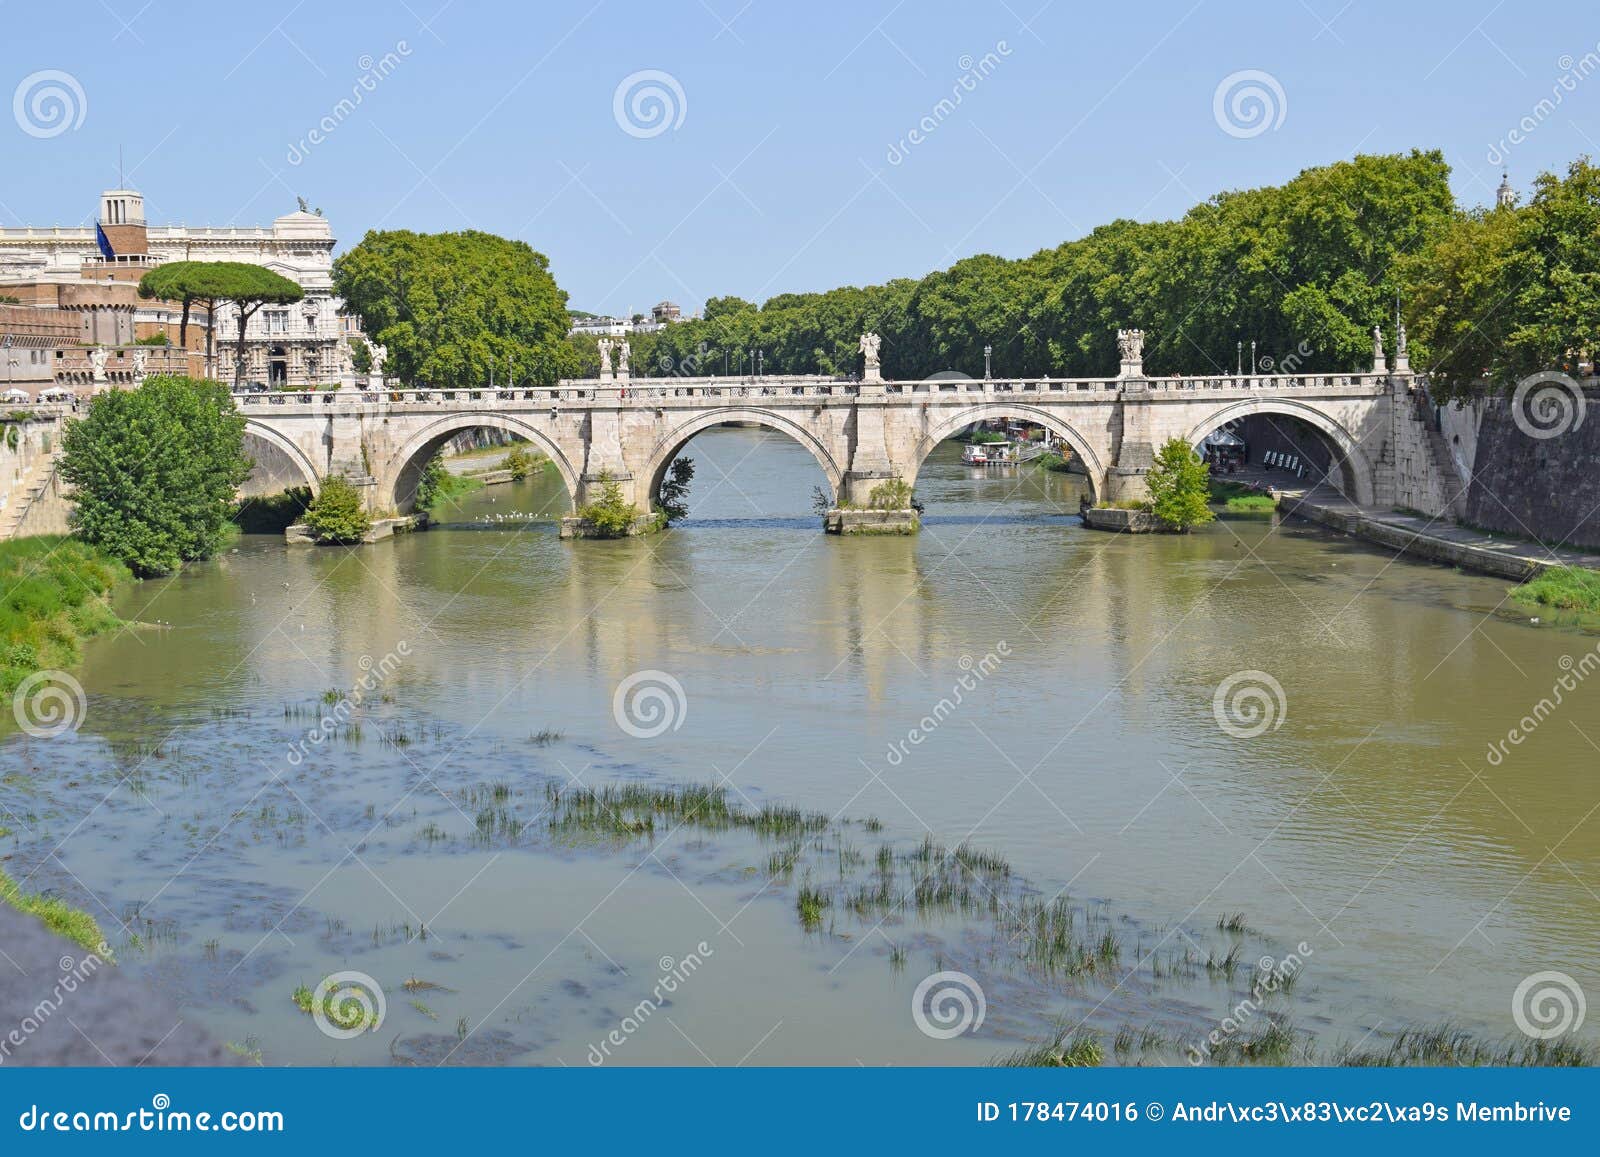 sant angelo bridge over rio tiber, rome